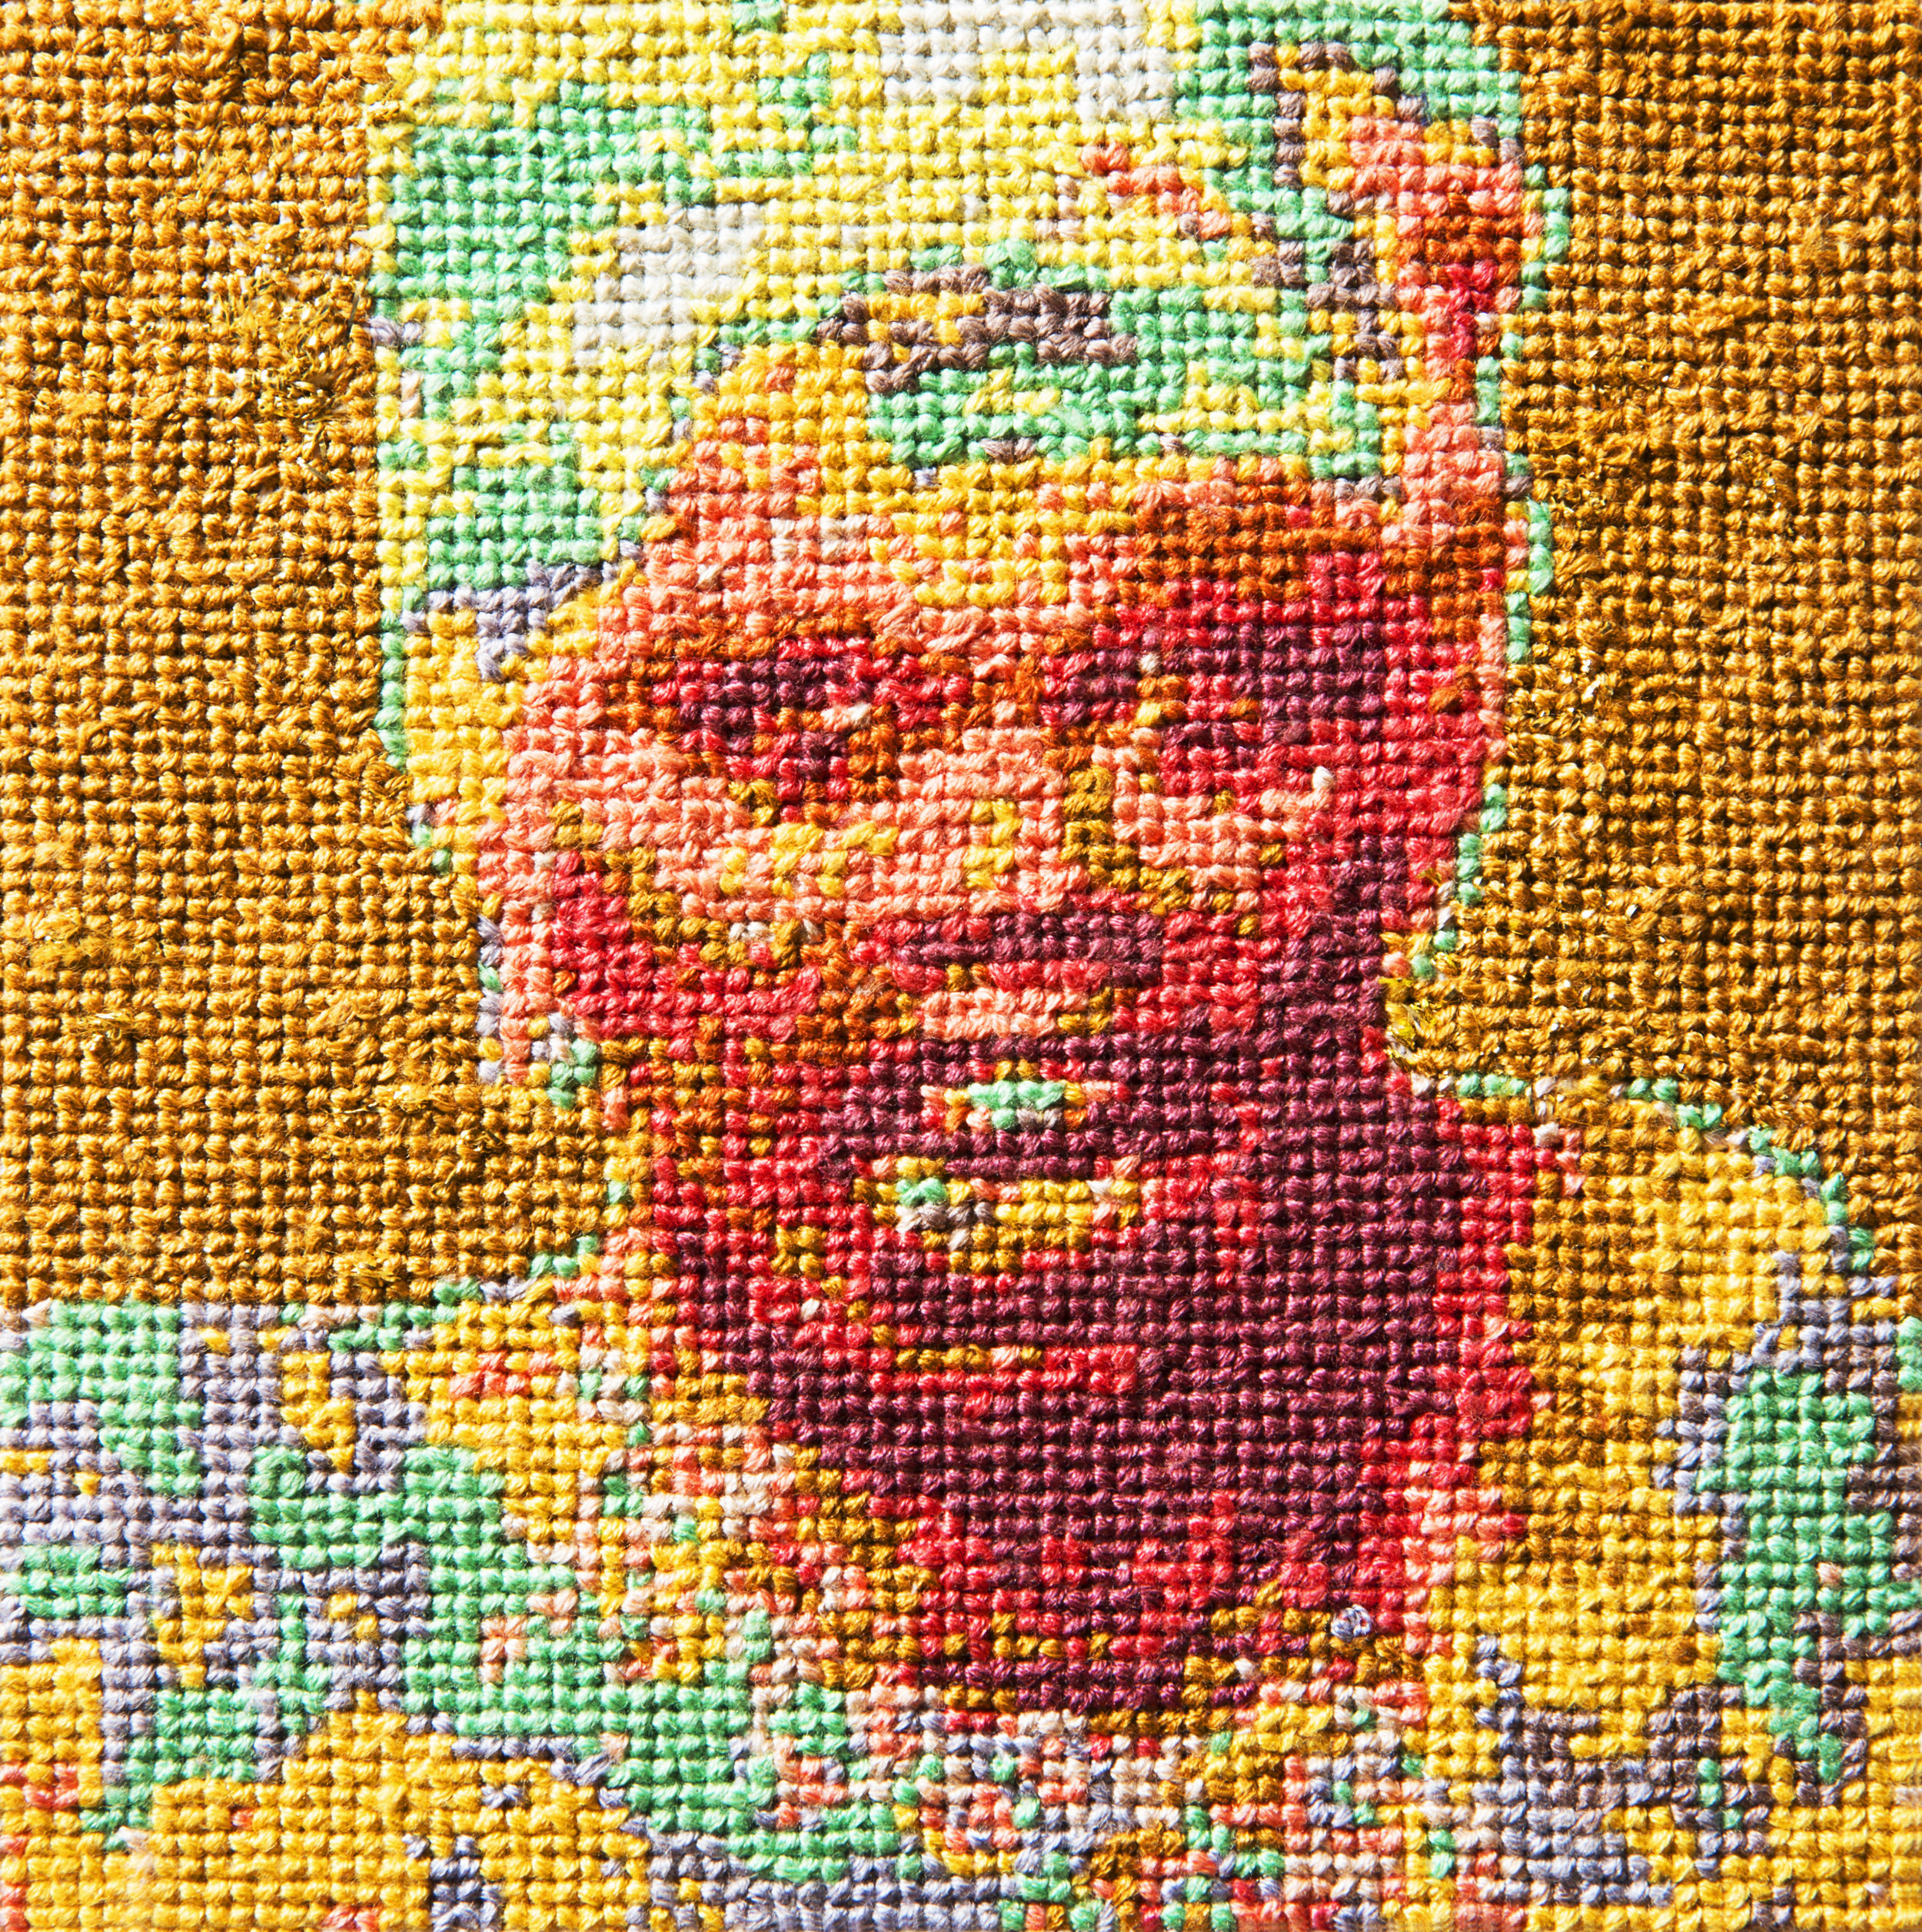   Frame 10   By Clay Butterworth  5 x 5 inches  Cotton thread on aida cloth  2013 